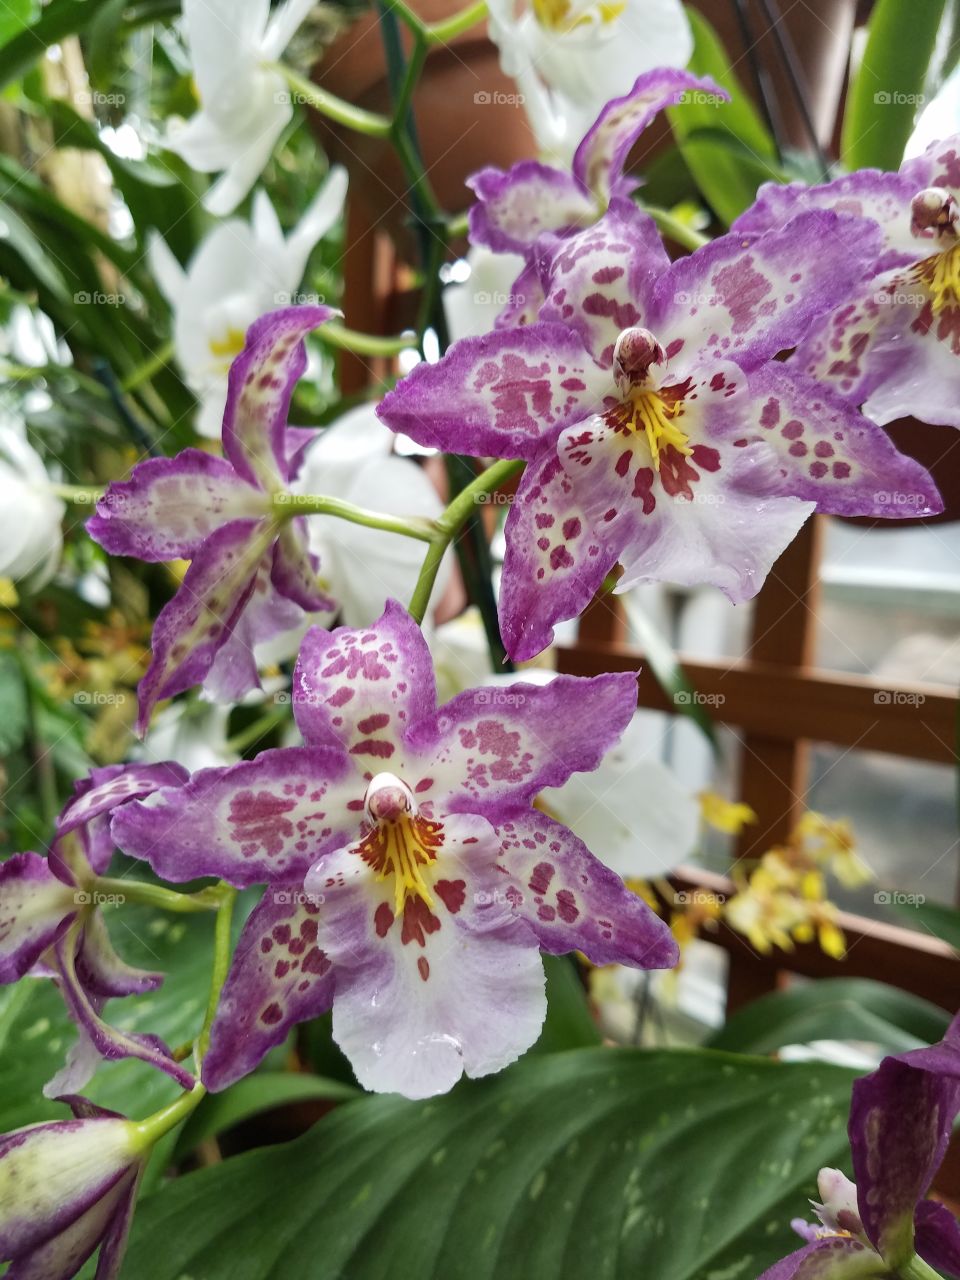 Purple speckled flowers